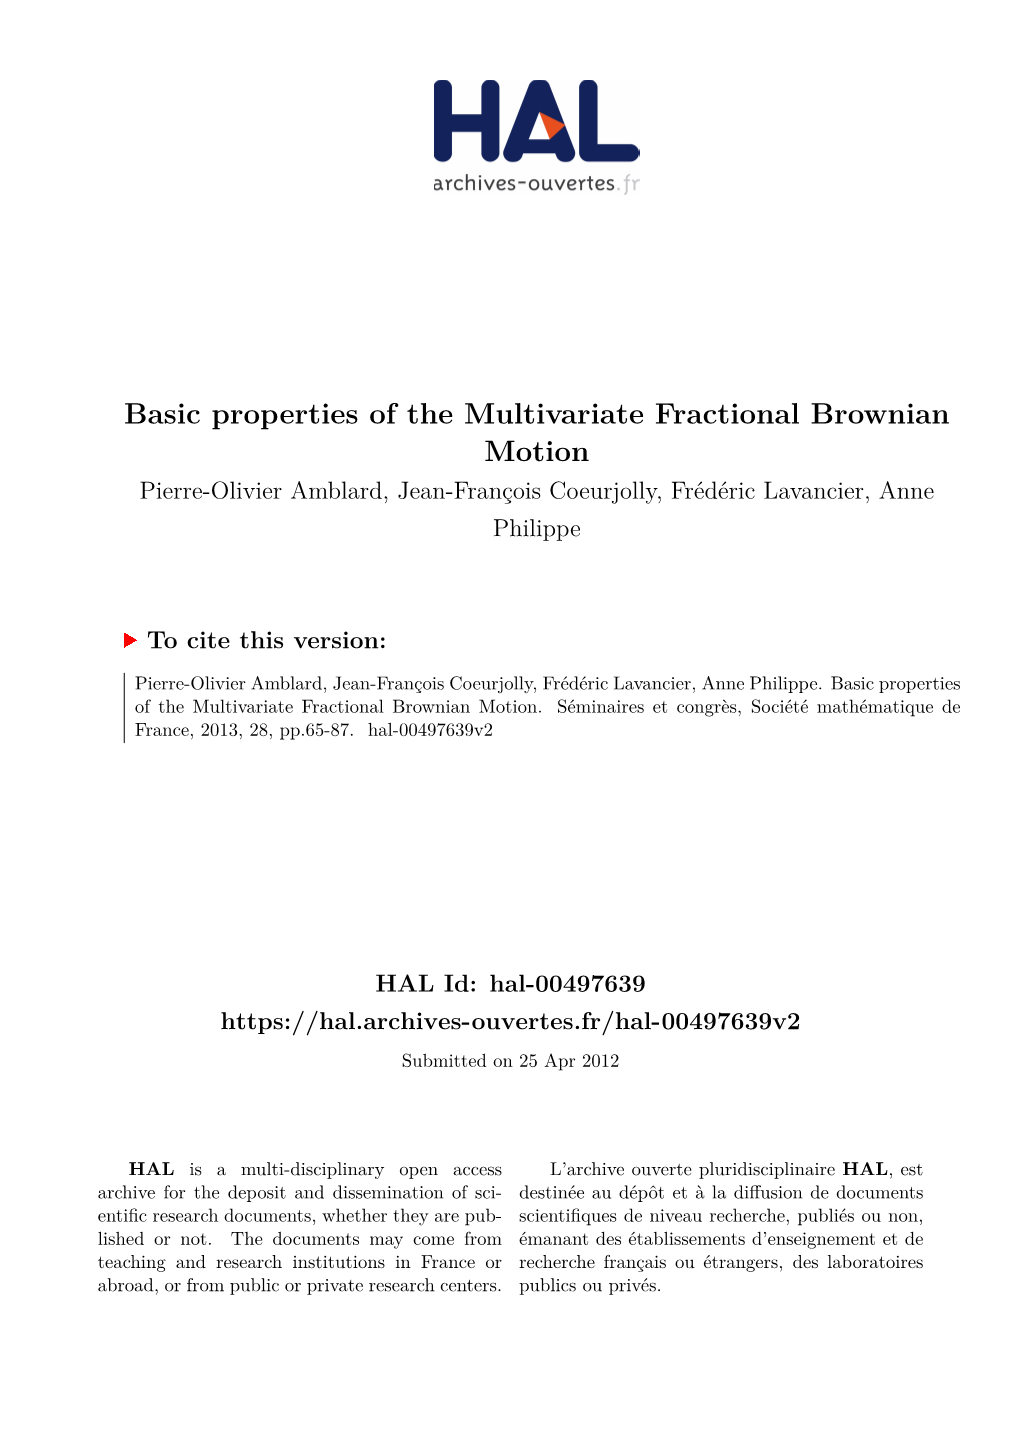 Basic Properties of the Multivariate Fractional Brownian Motion Pierre-Olivier Amblard, Jean-François Coeurjolly, Frédéric Lavancier, Anne Philippe